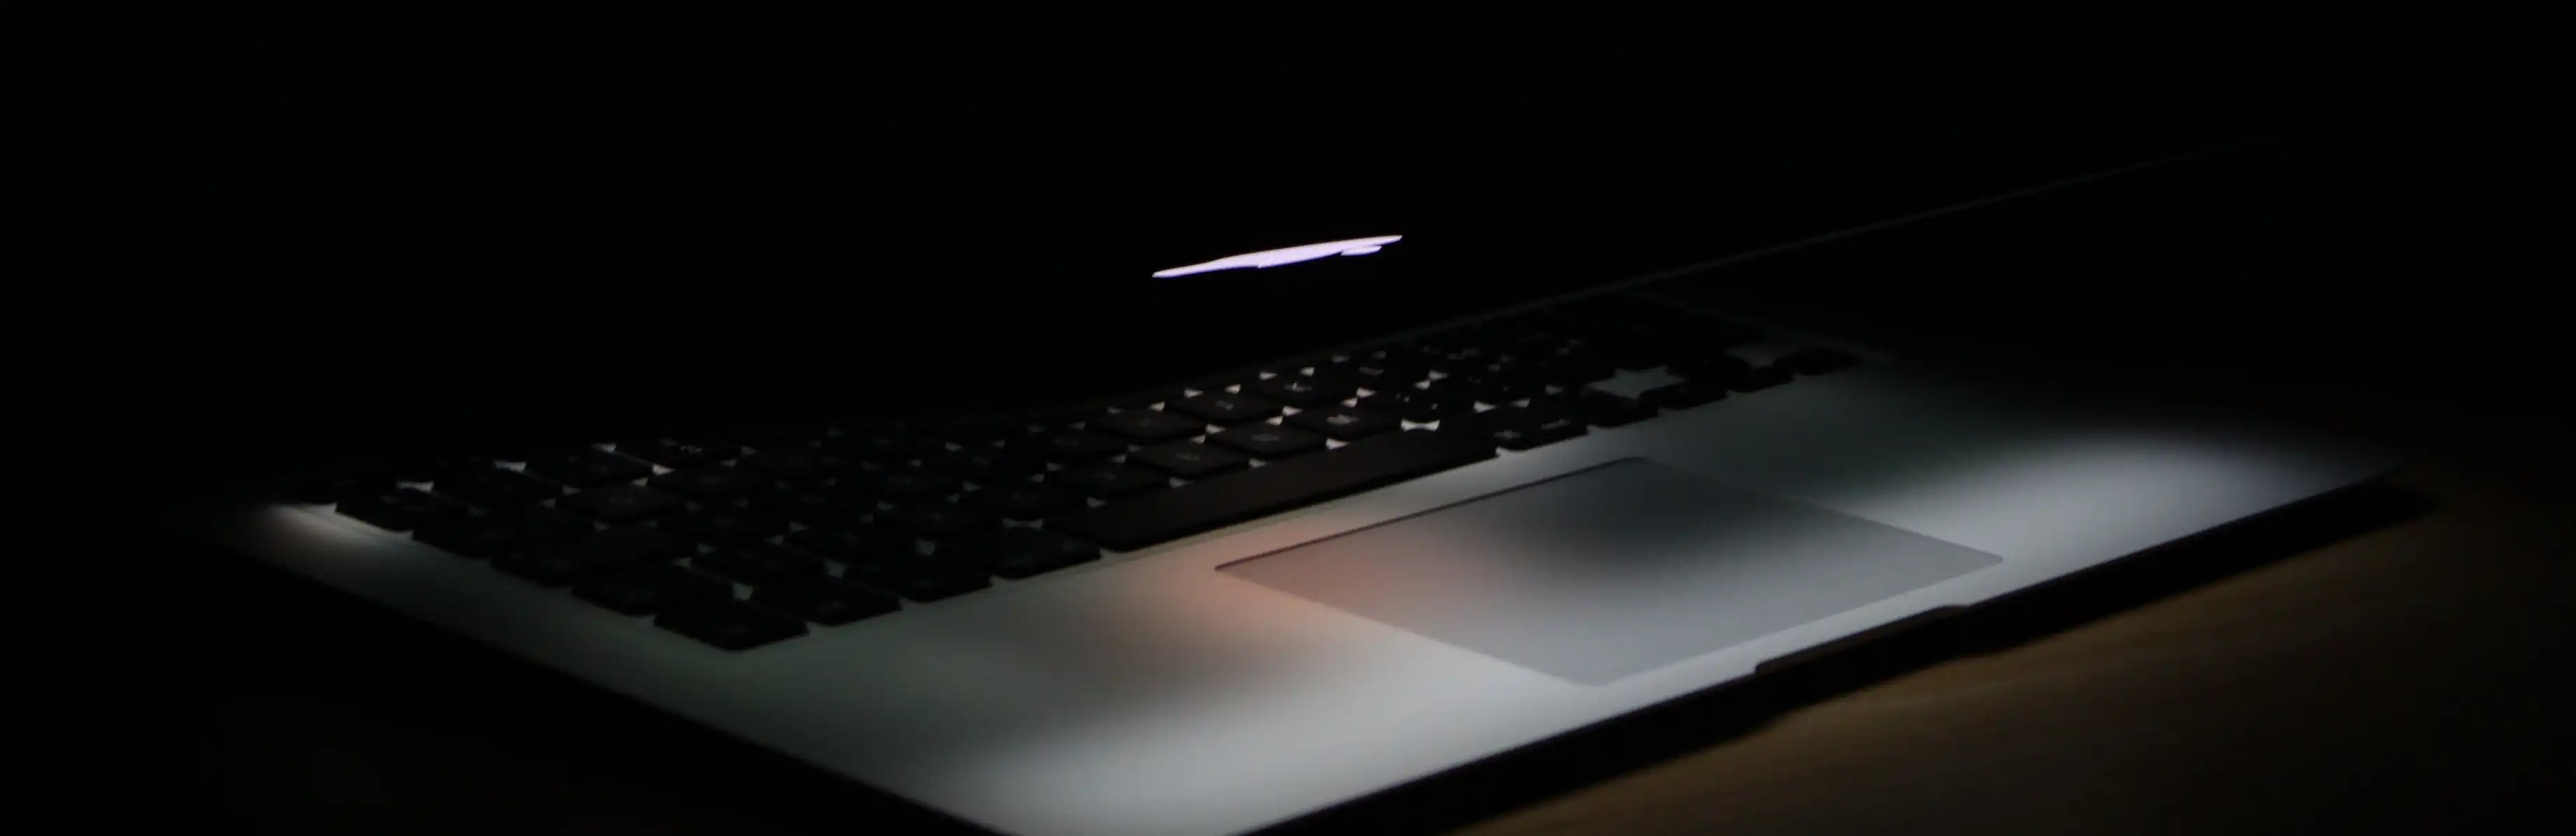 Macbook Pro Screen Half Closed Light On